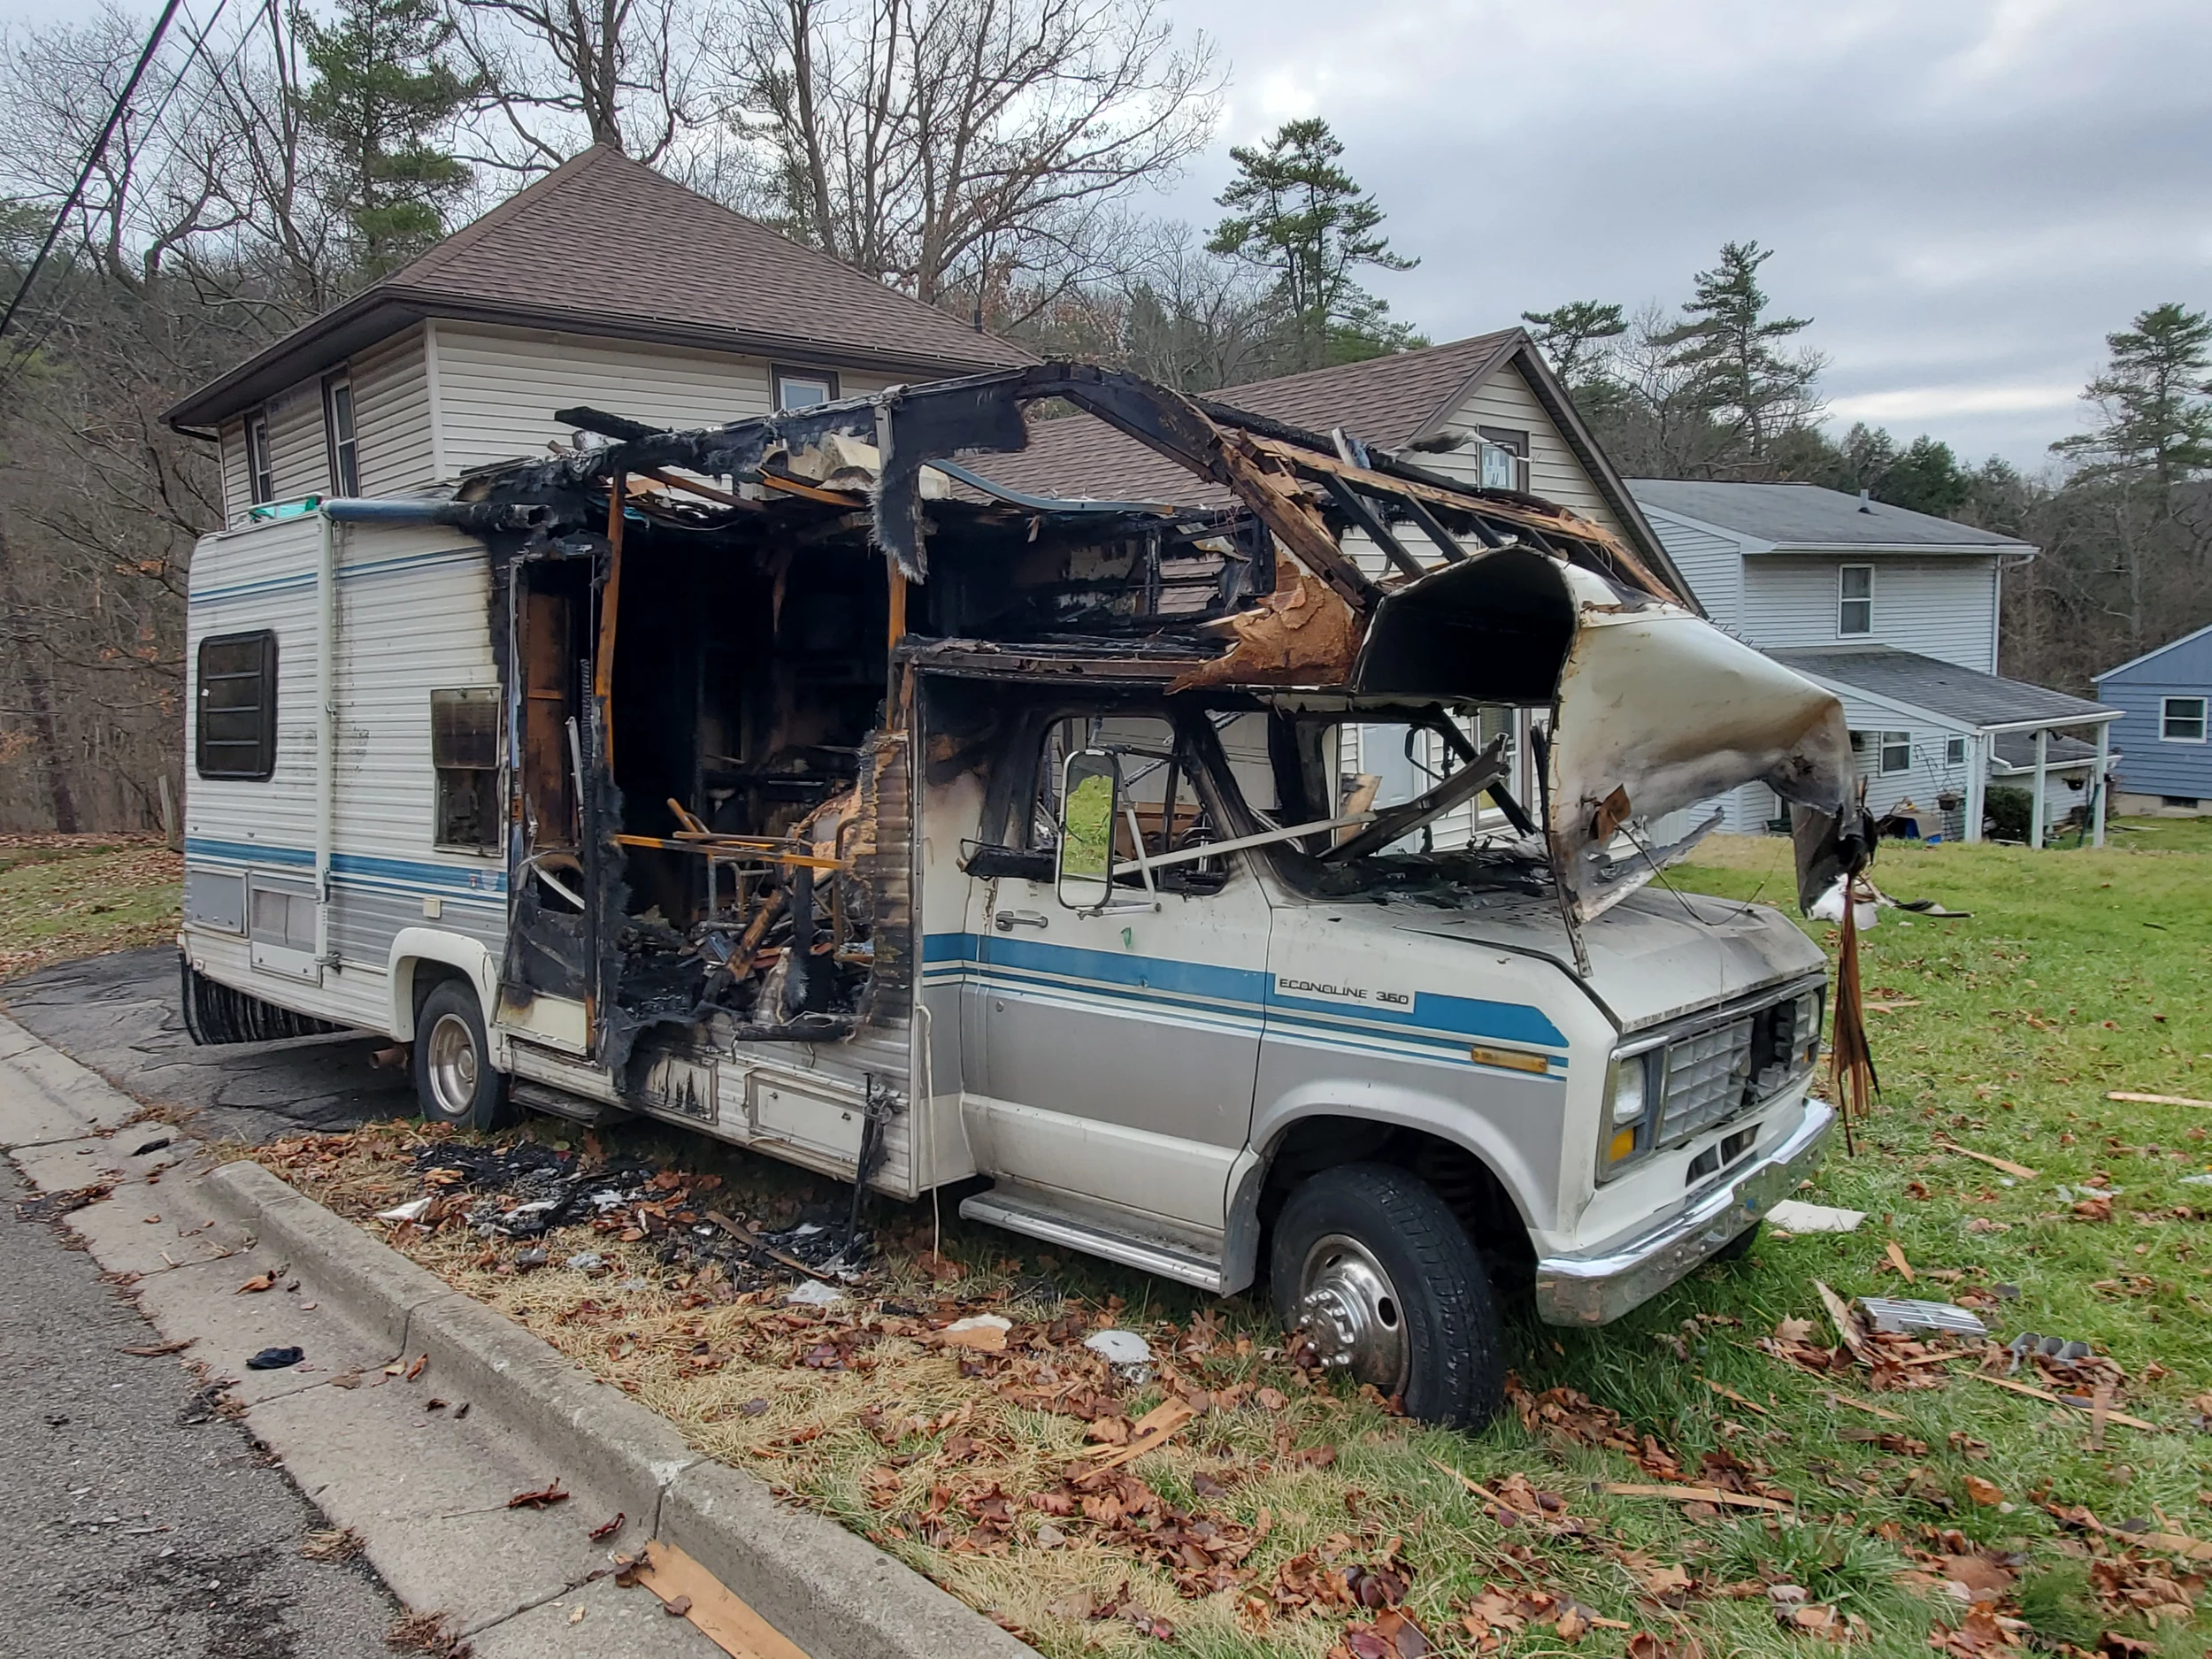 Residents Near Ross Park Want Burnt-Out RV Eyesore Hauled Away pic